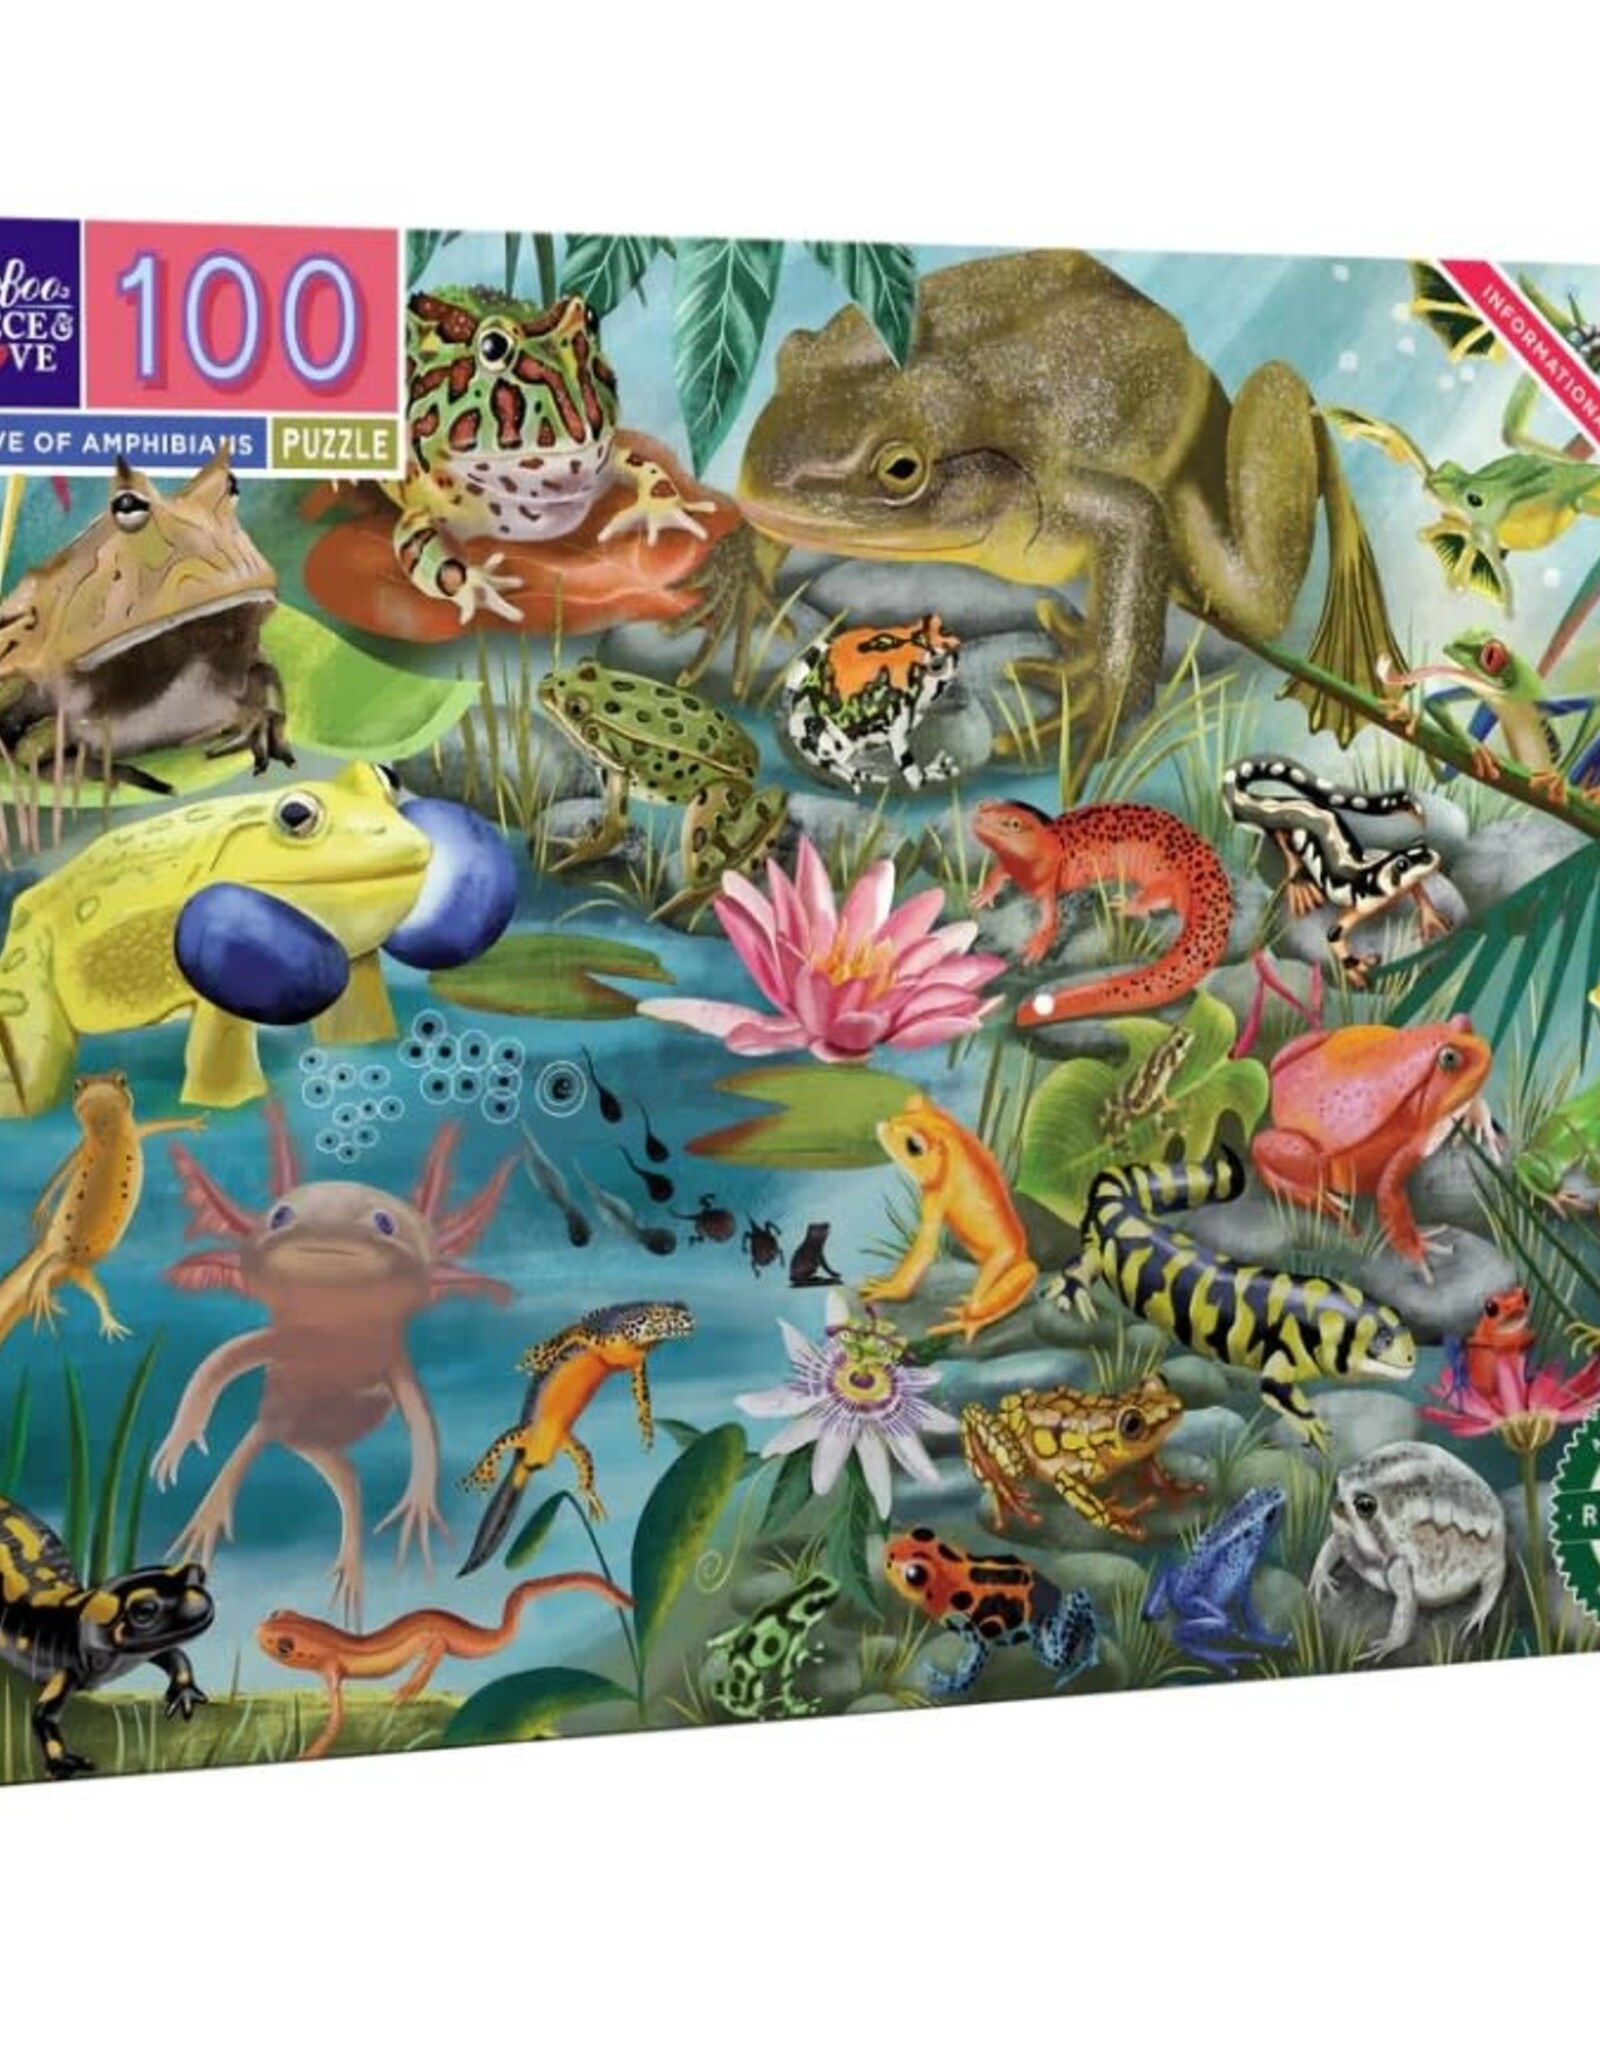 eeBoo Love of Amphibians 100 PC